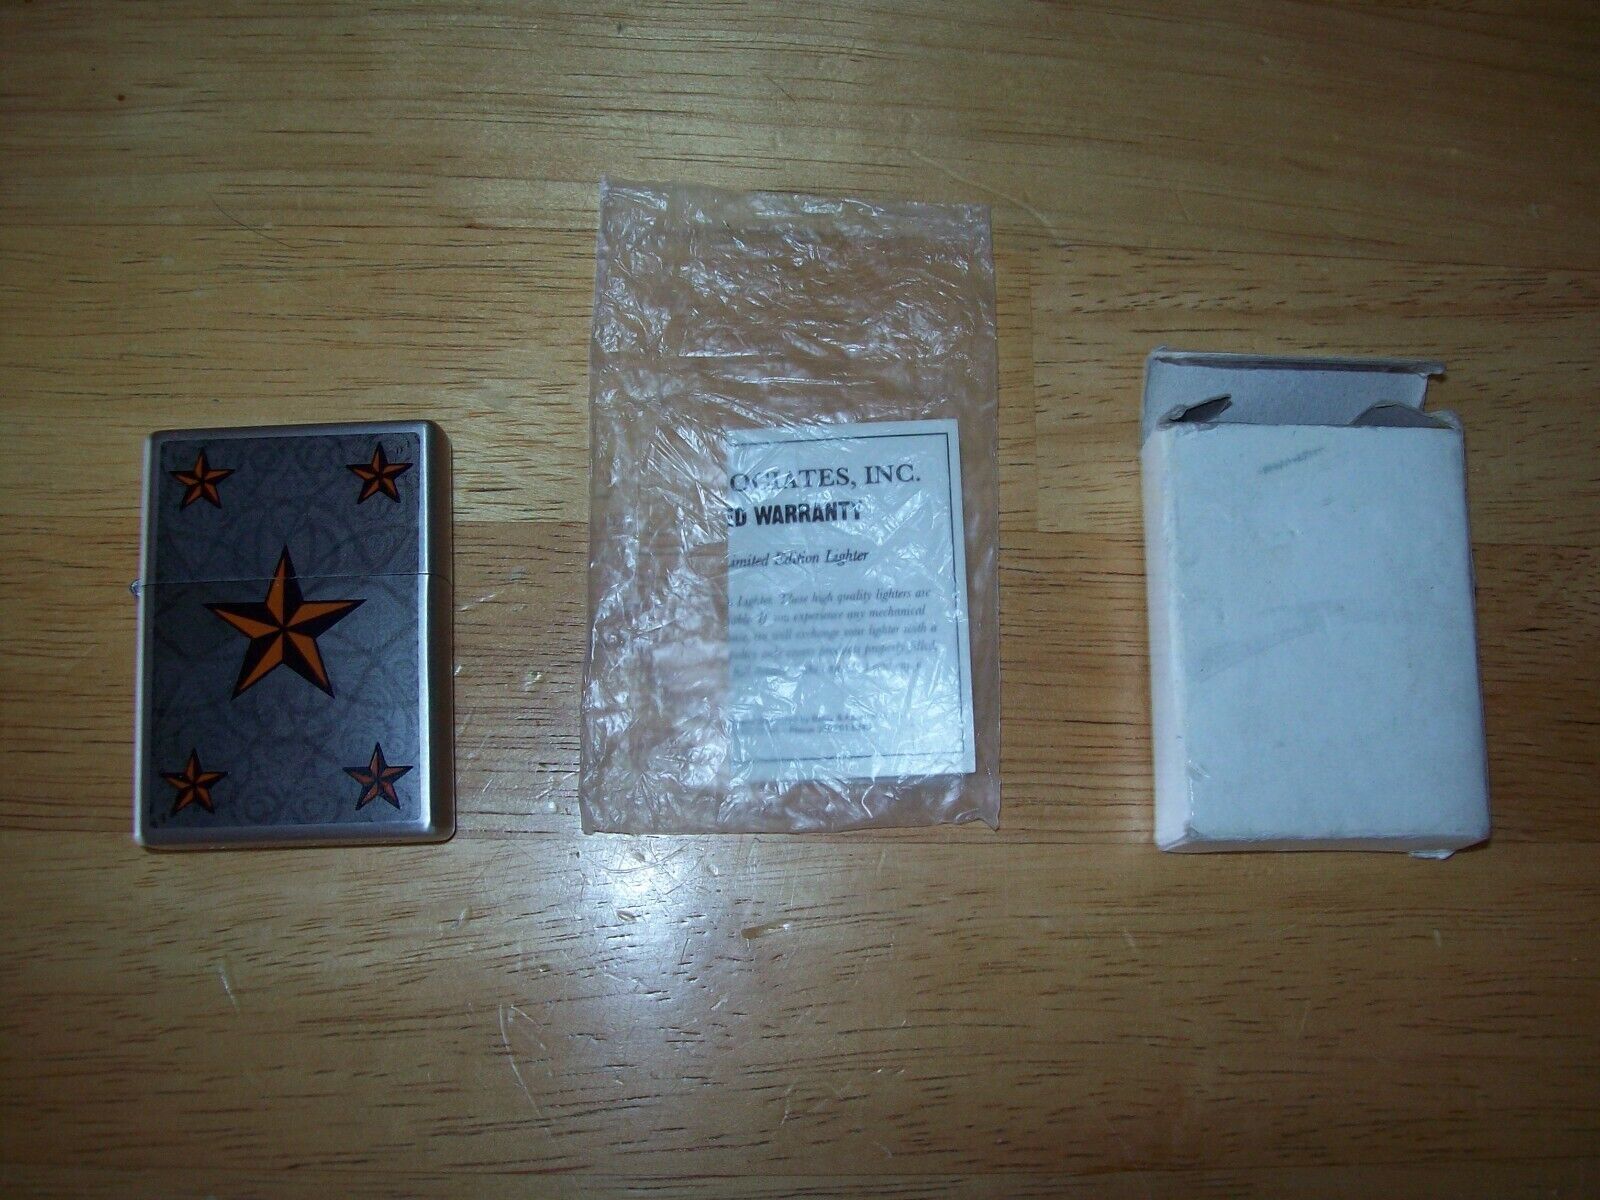 SPECIAL MARLBORO 5 STAR 2007 Limited Edition Lighter - BRAND NEW! - $29.69